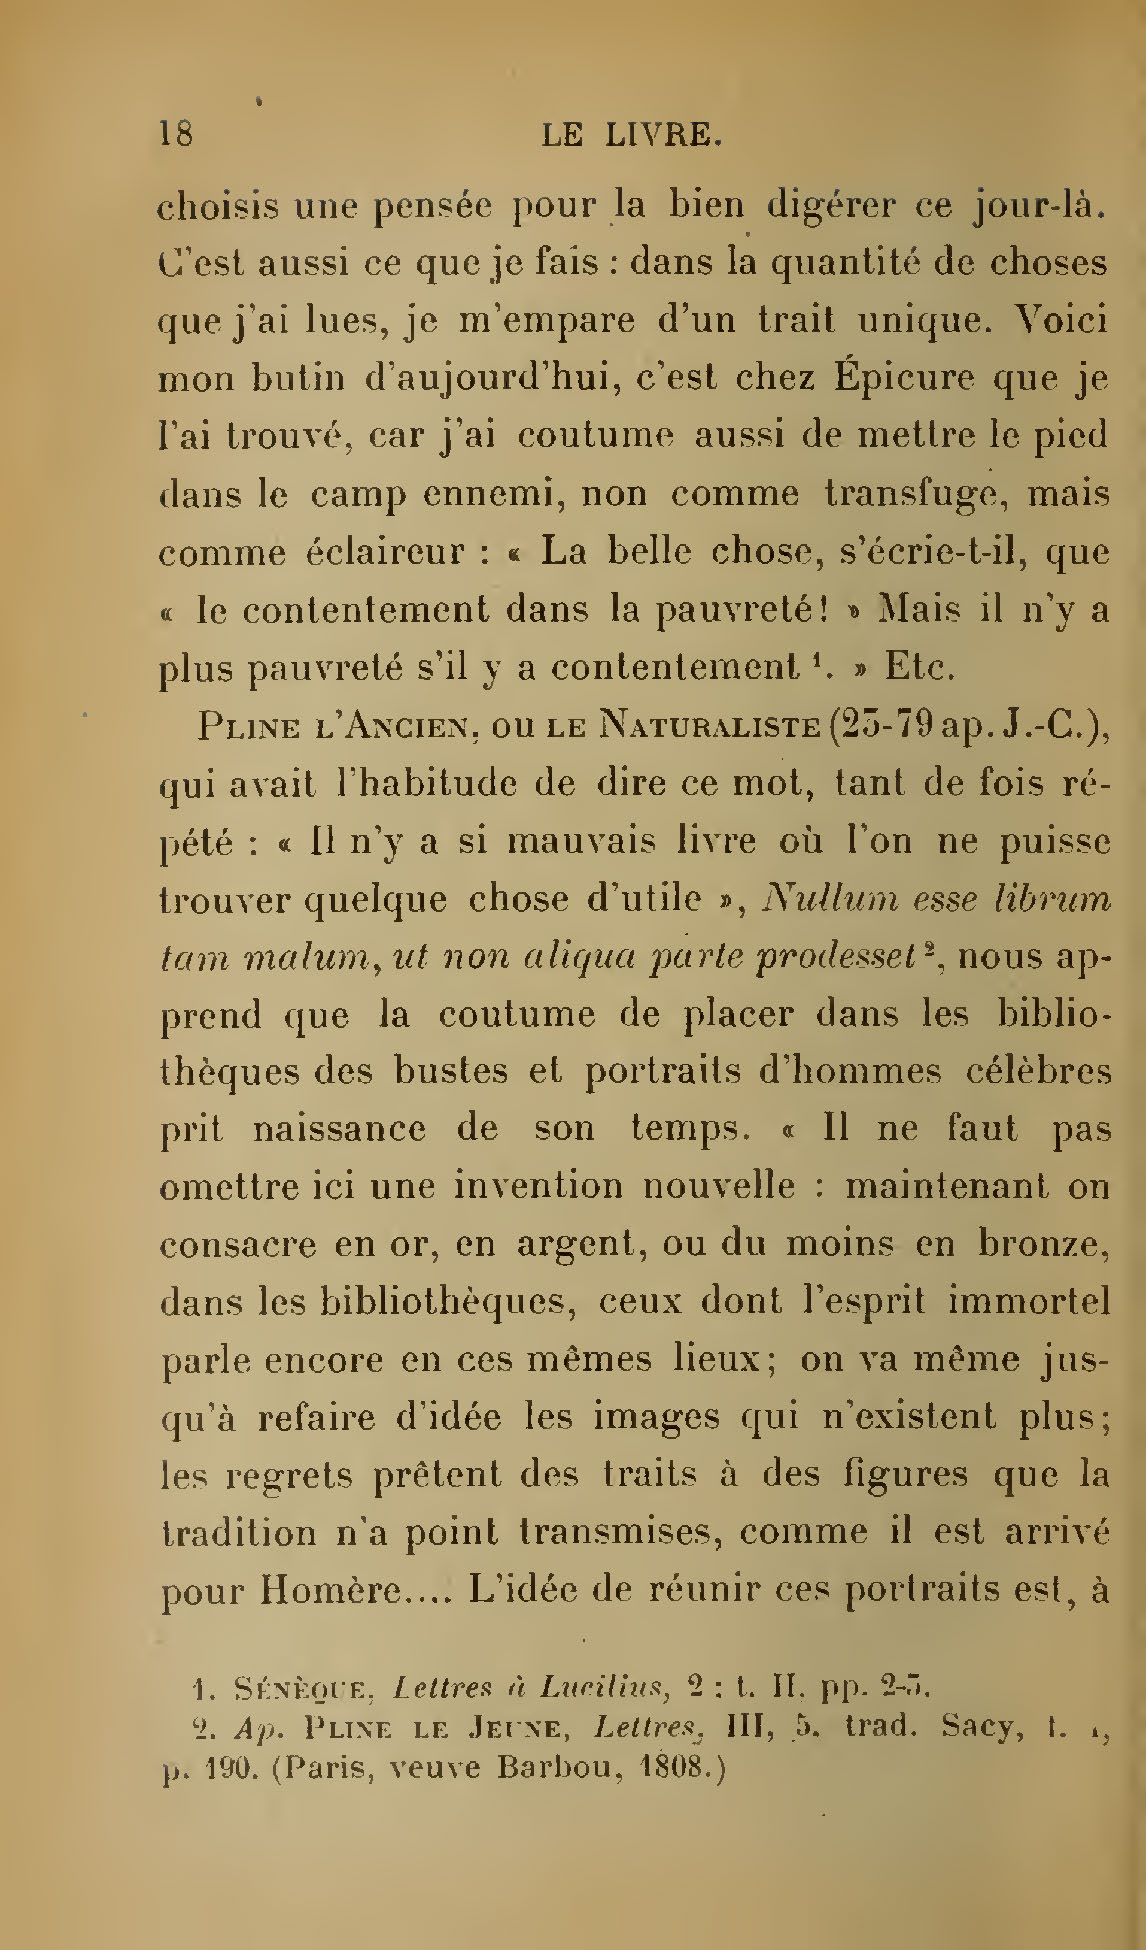 Albert Cim, Le Livre, t. I, p. 18.